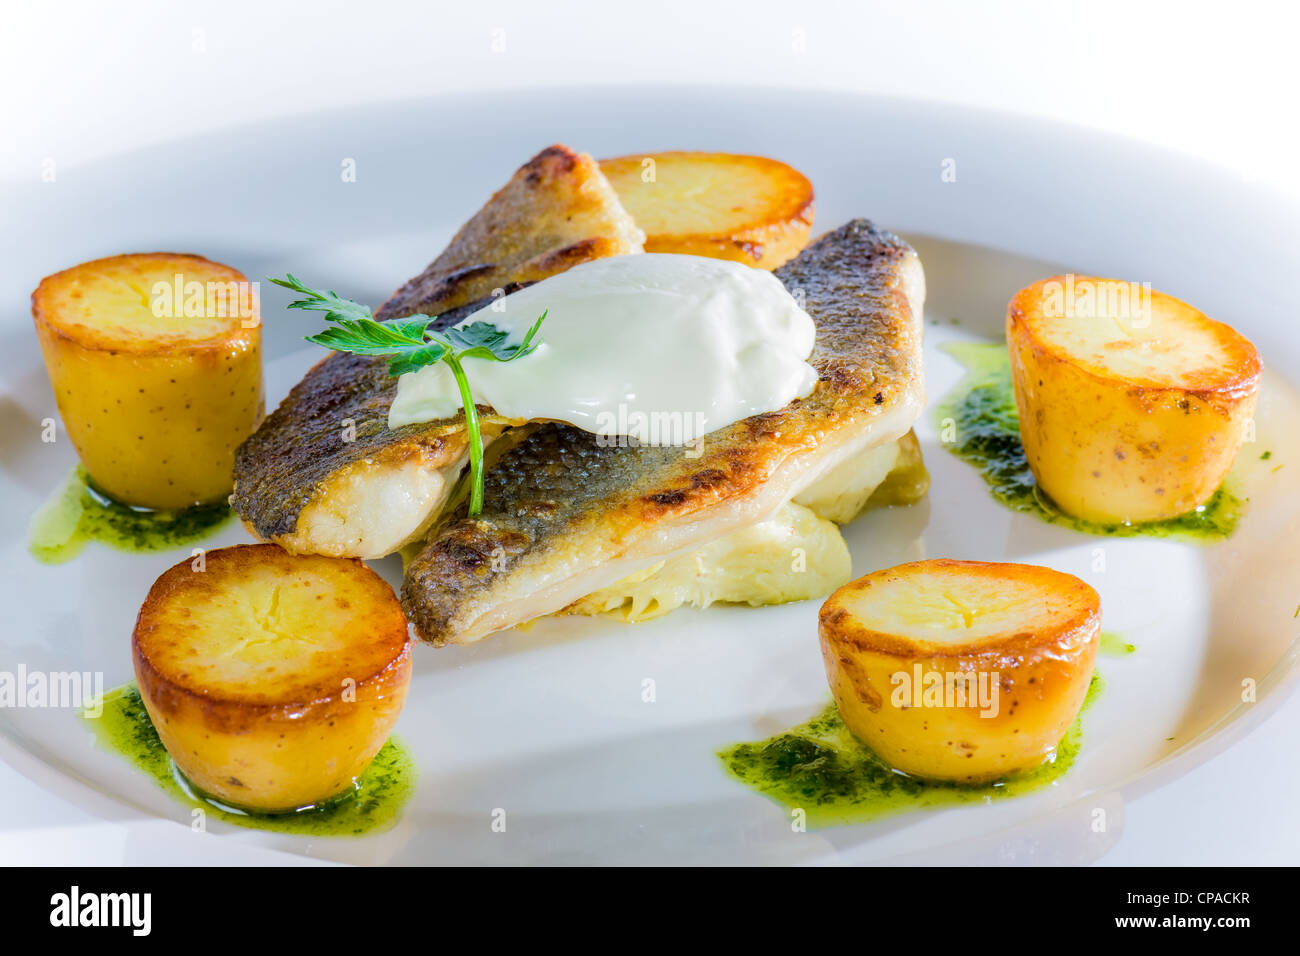 Chef's Presentation Dish - Sea Bass Stock Photo